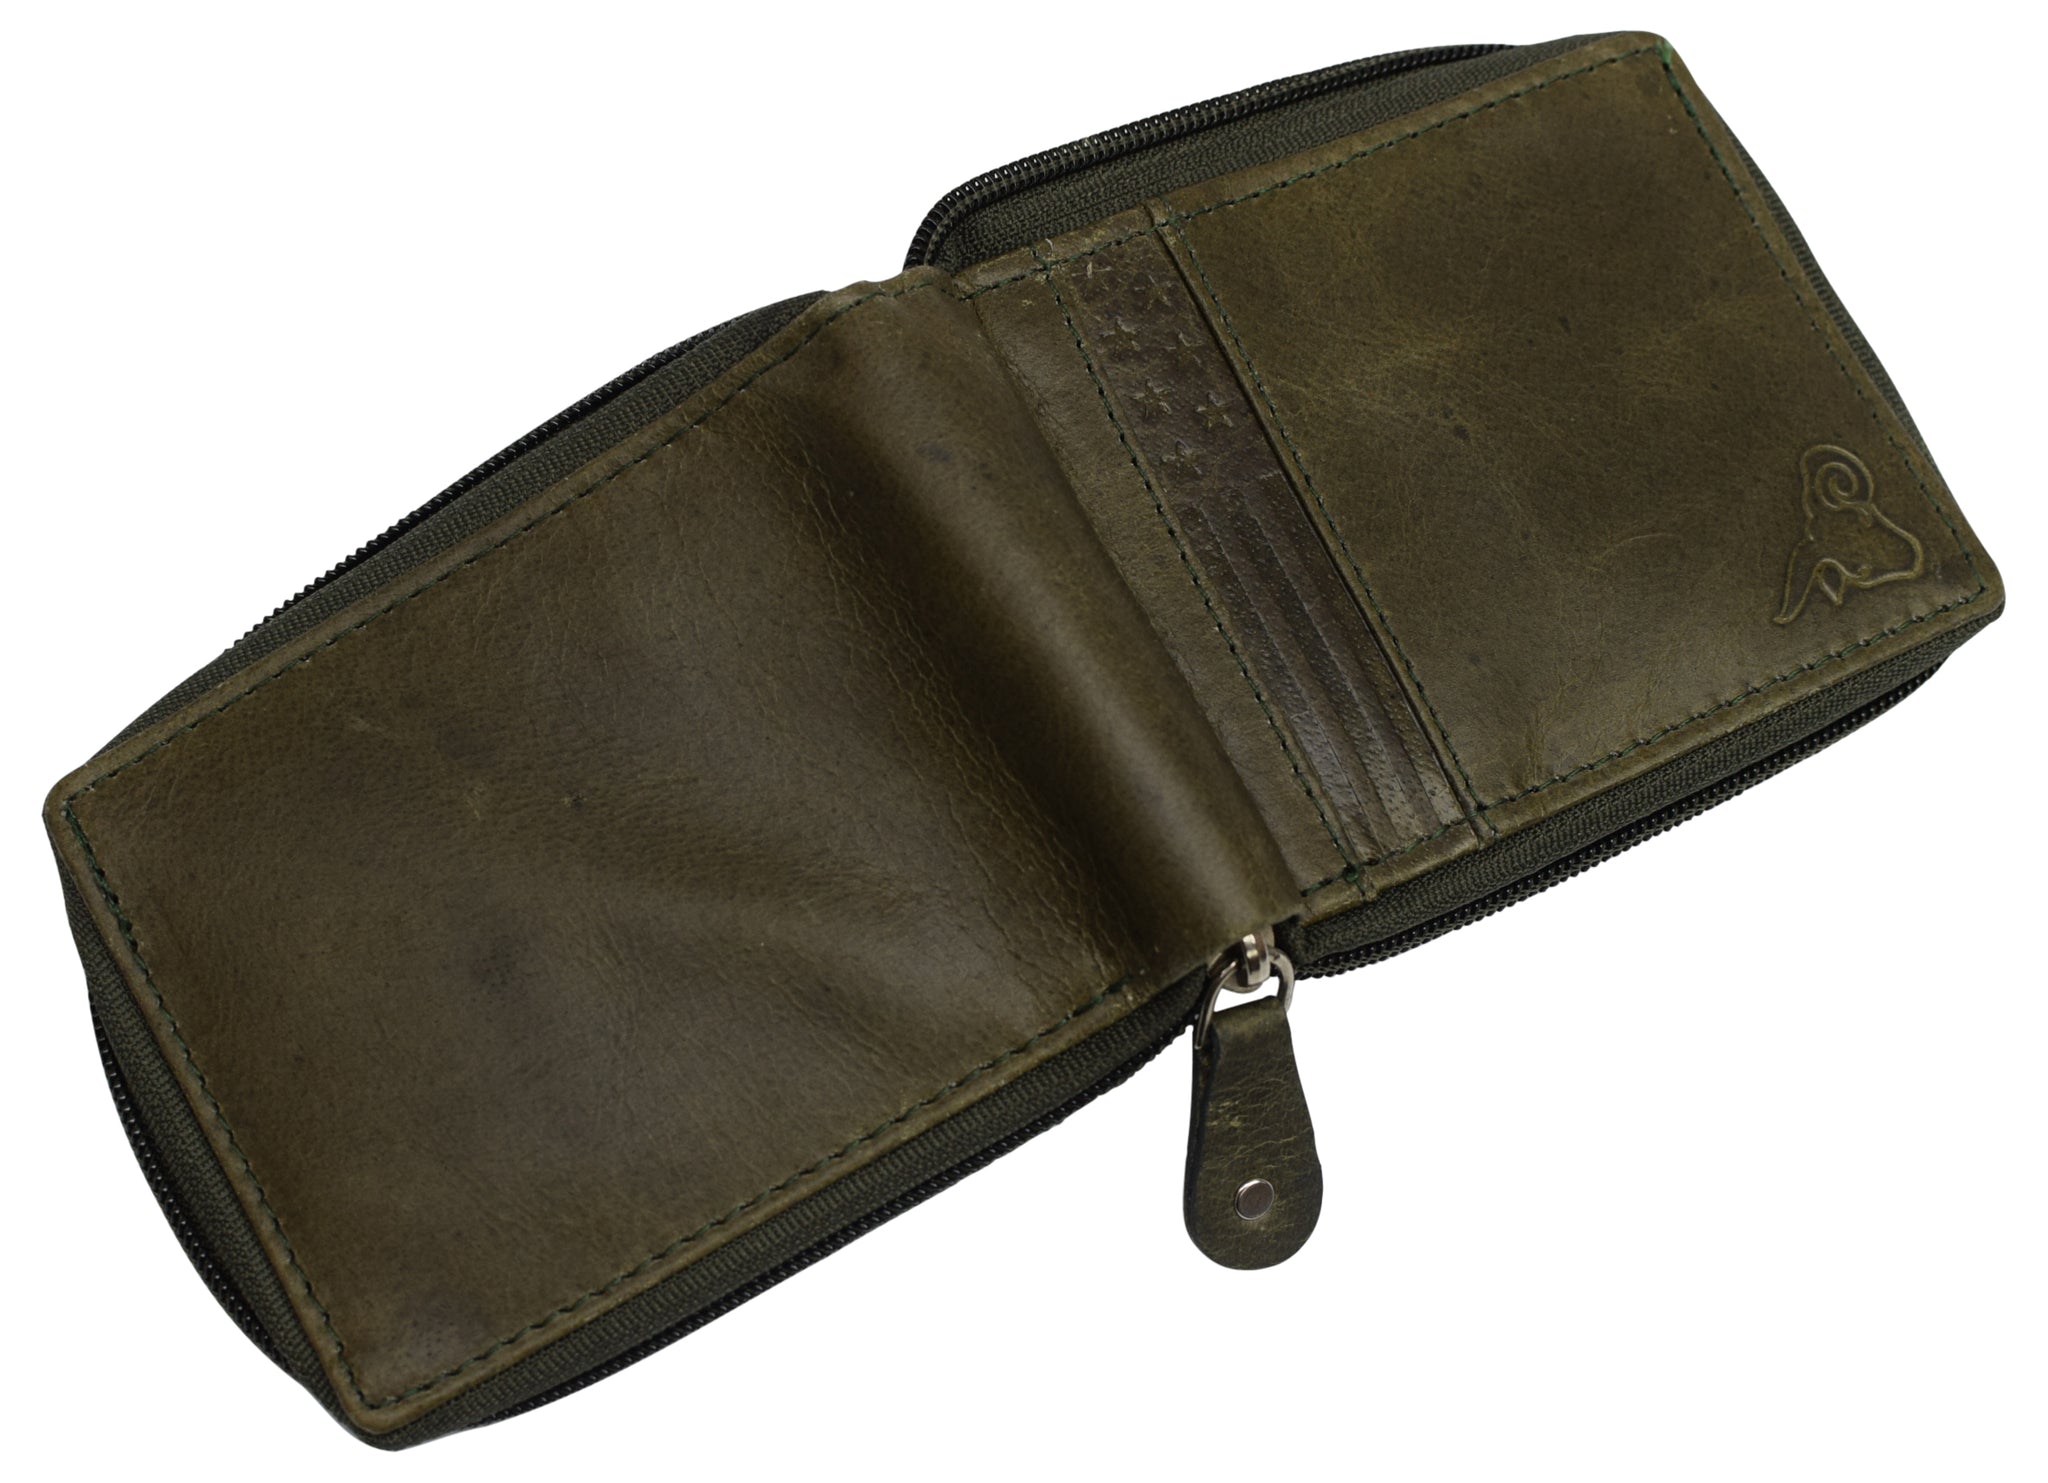 Cazoro Mens RFID Blocking Wallets Zipper Leather Wallet for Men Bifold RFID Card Holder USA (Tan)